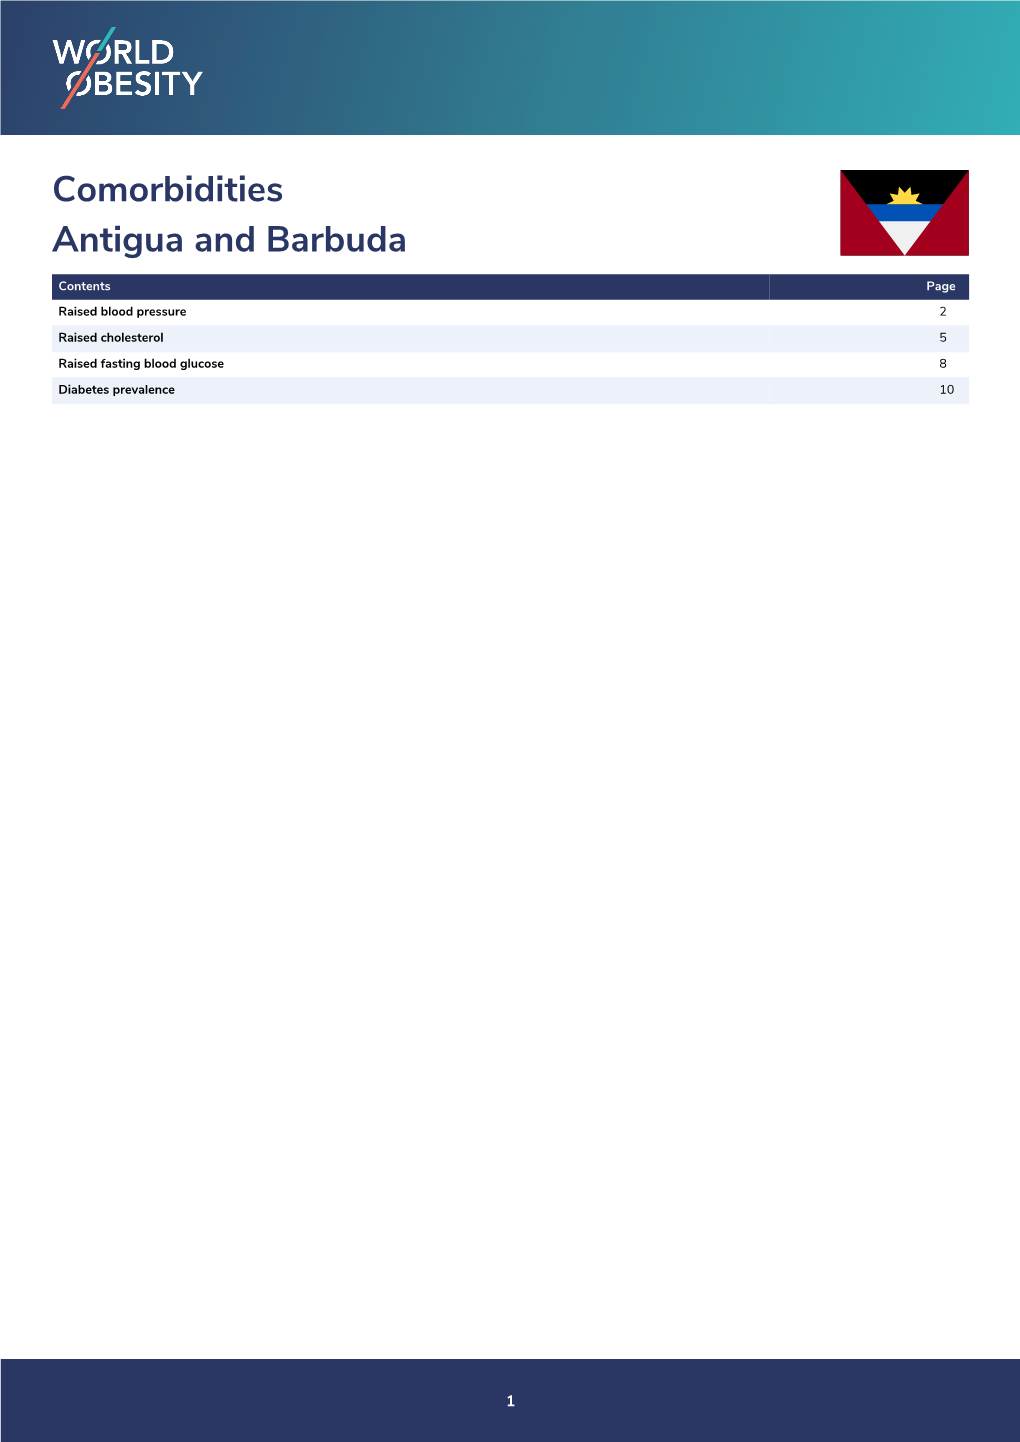 Comorbidities: Antigua and Barbuda